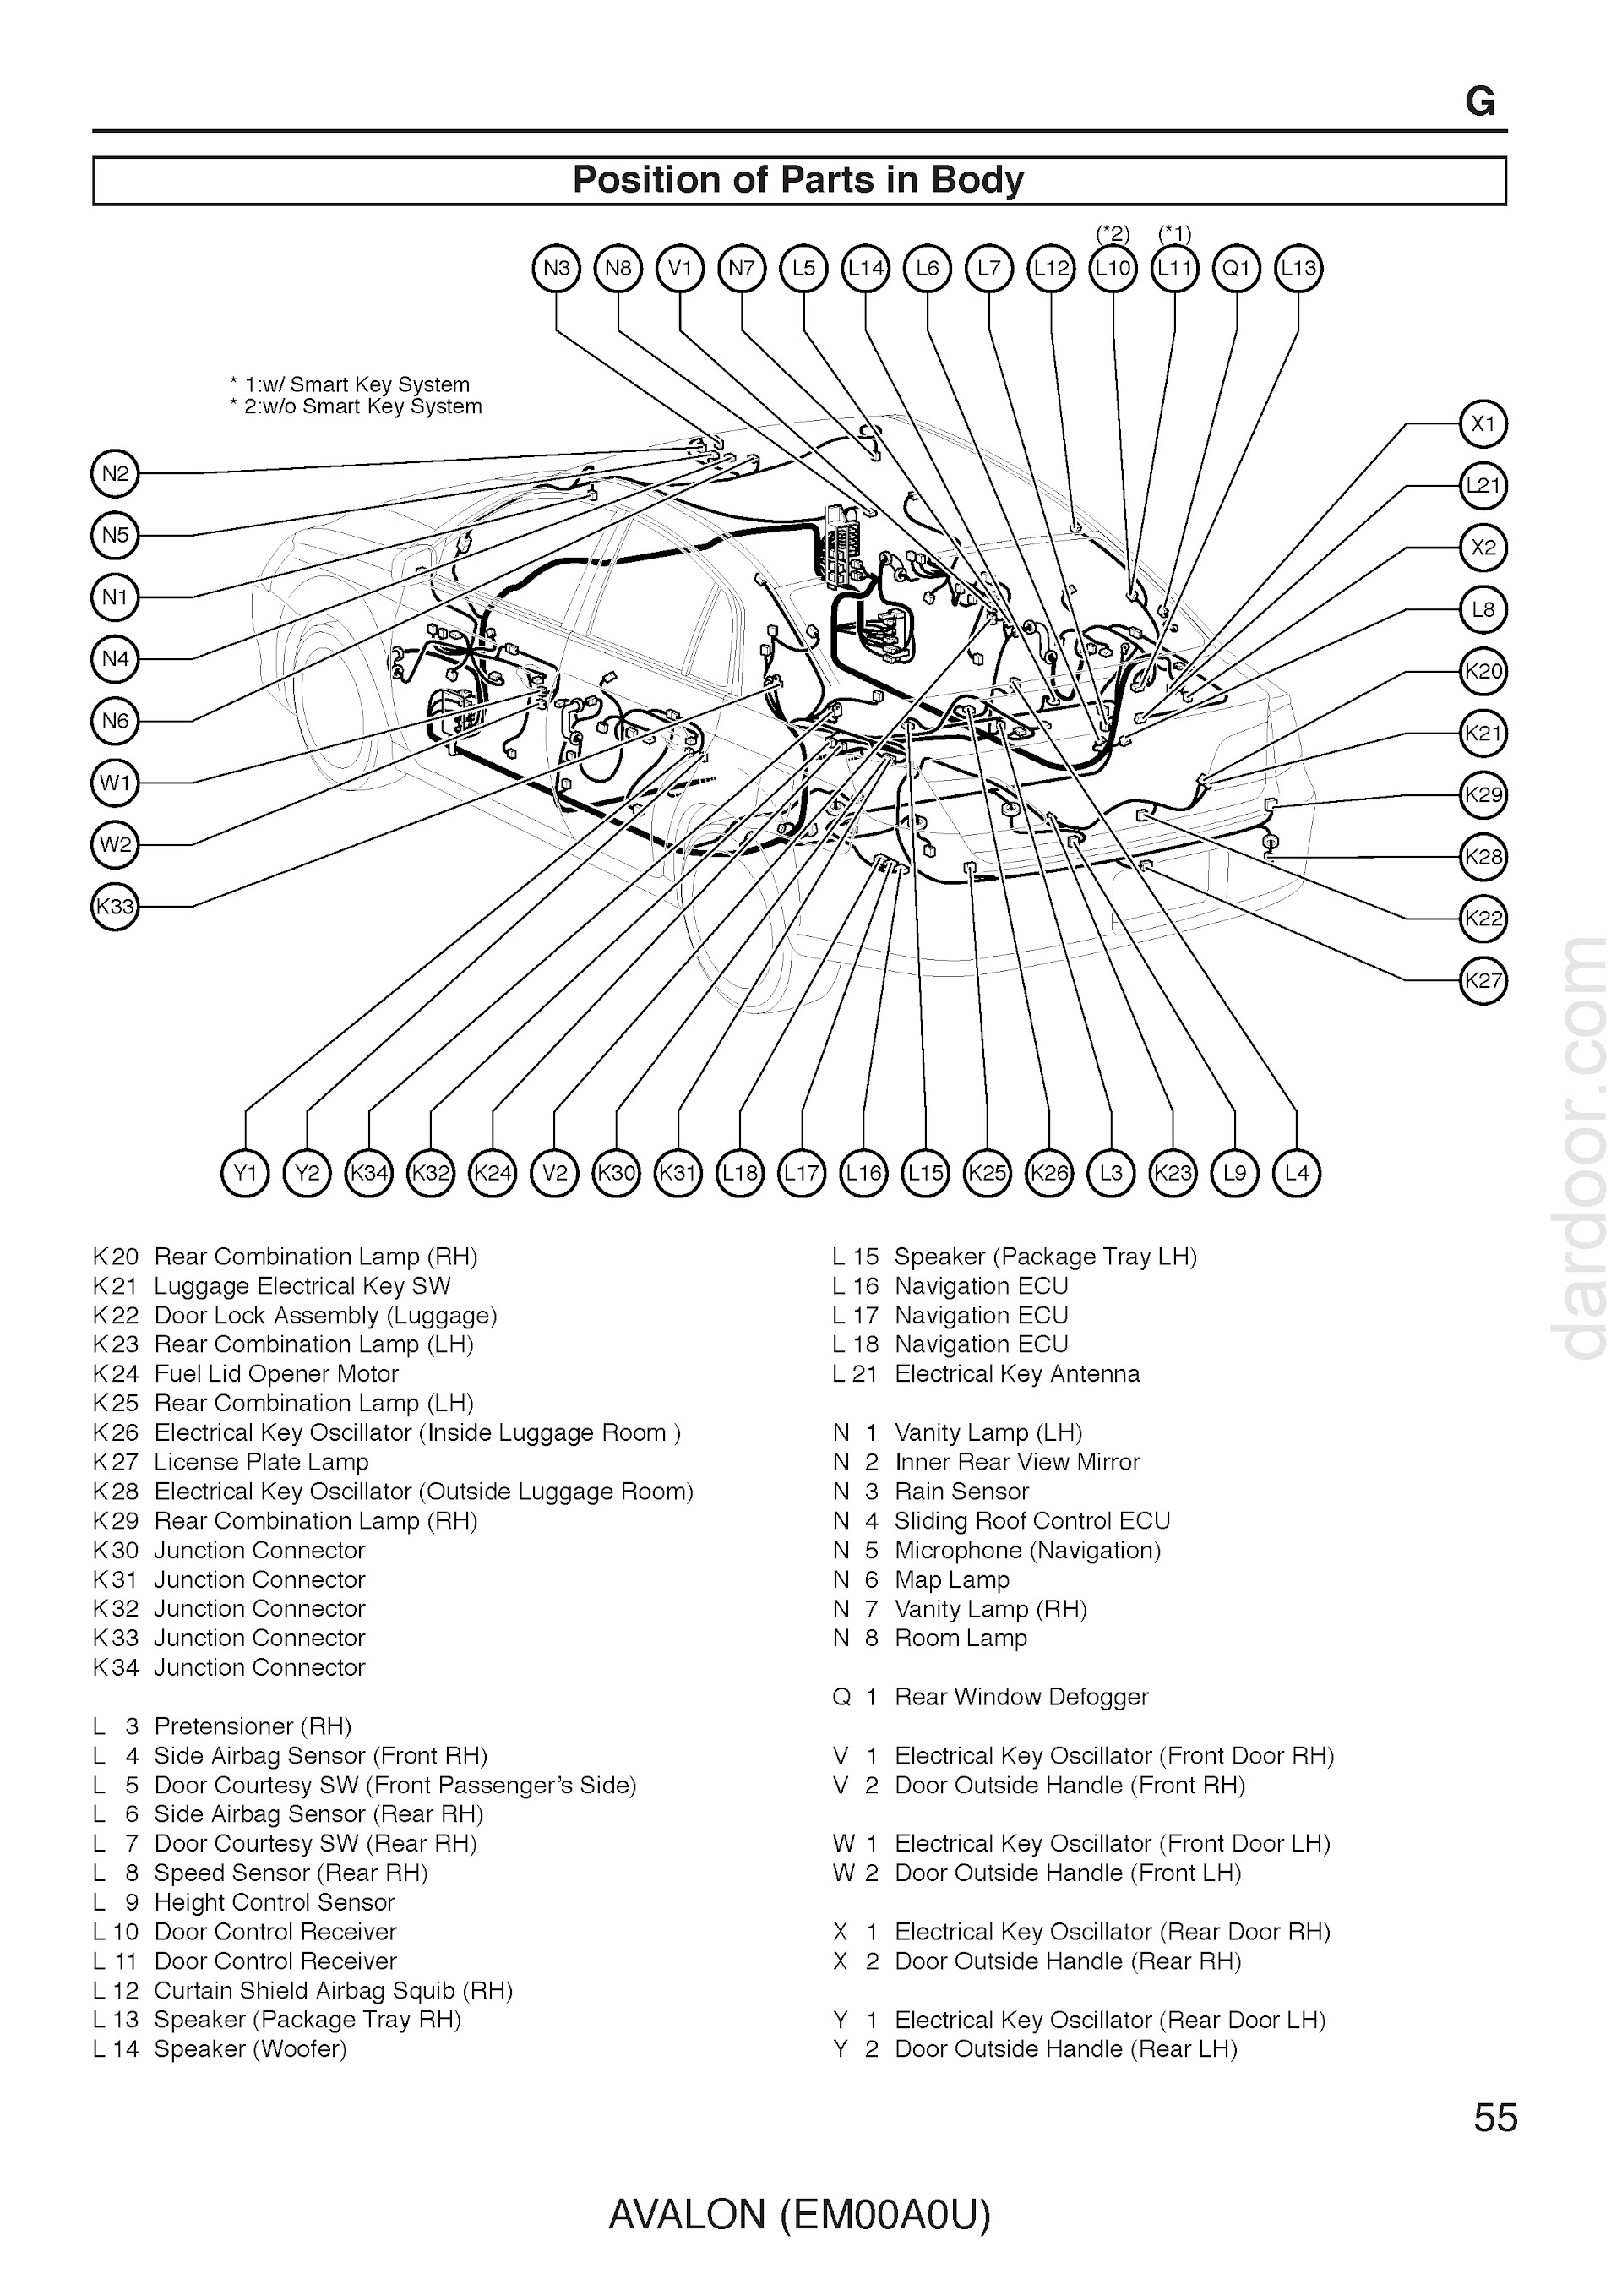 2006 Toyota Avalon Repair Manual, Wiring Harness